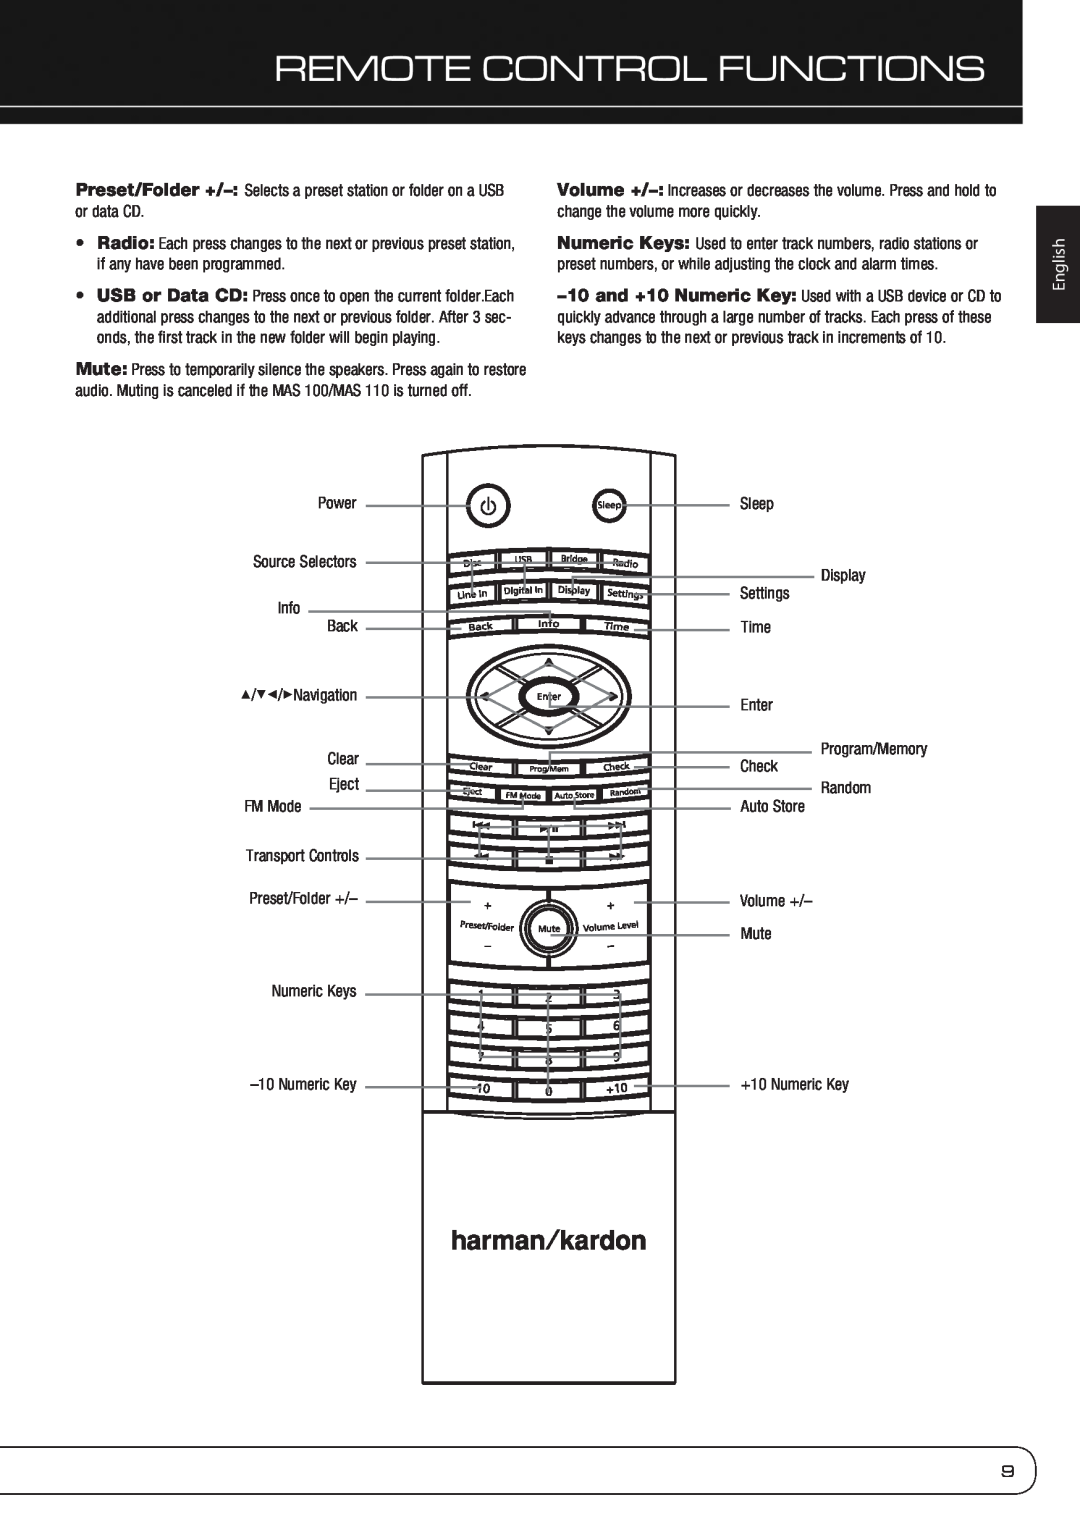 Harman-Kardon MAS 110, MAS 100 Remote Control Functions, English, Power Source Selectors Info Back 1/57/3Navigation 